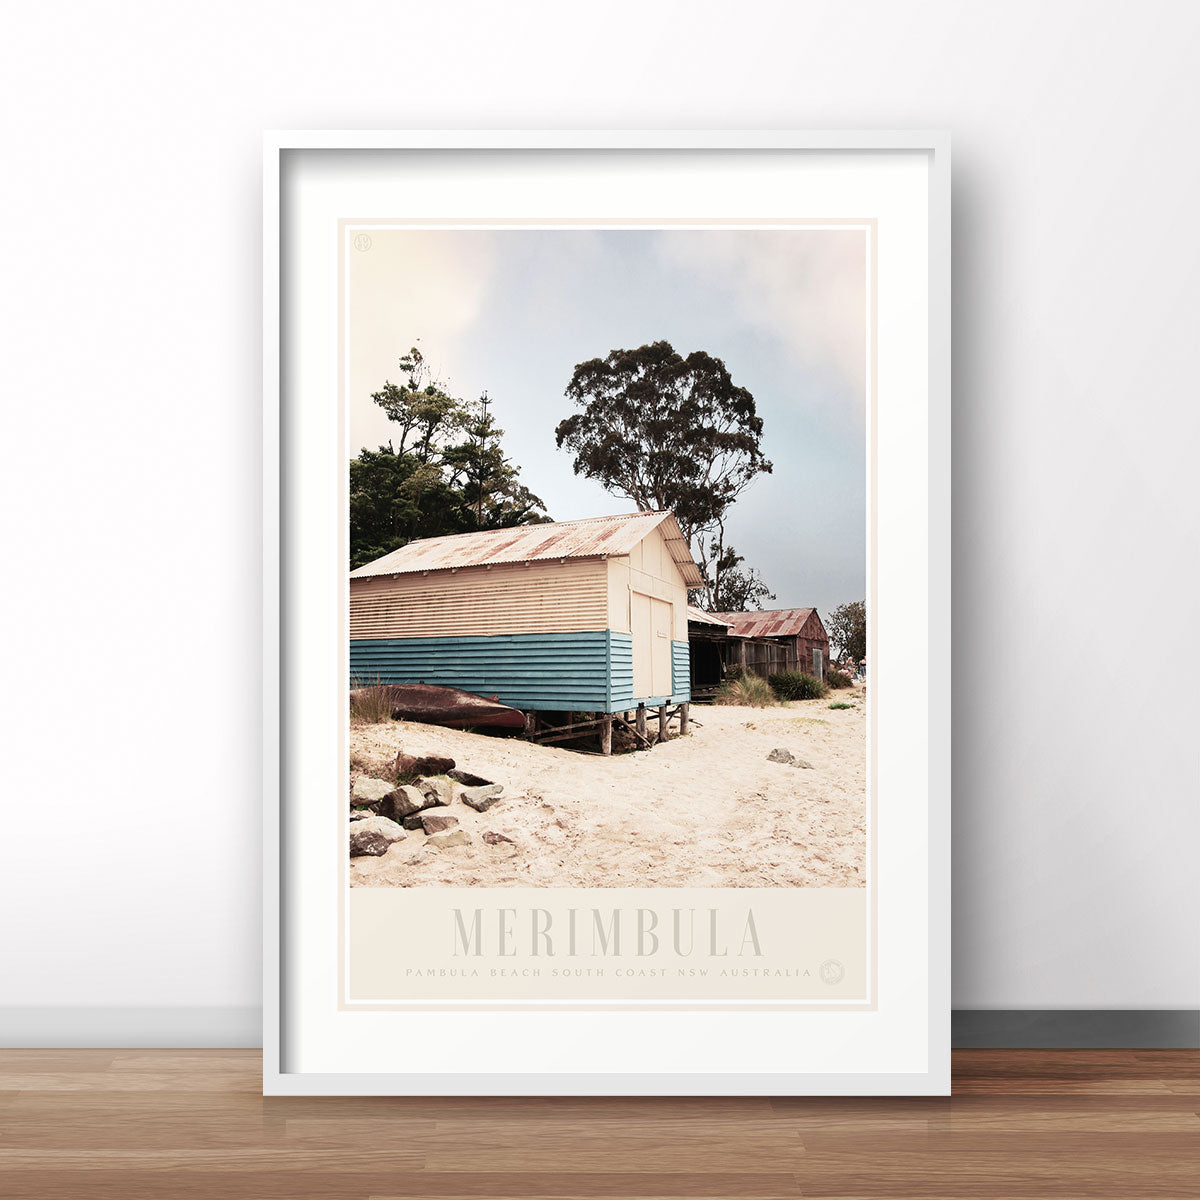 Merimbula NSW vintage retro travel poster print from Places We Luv